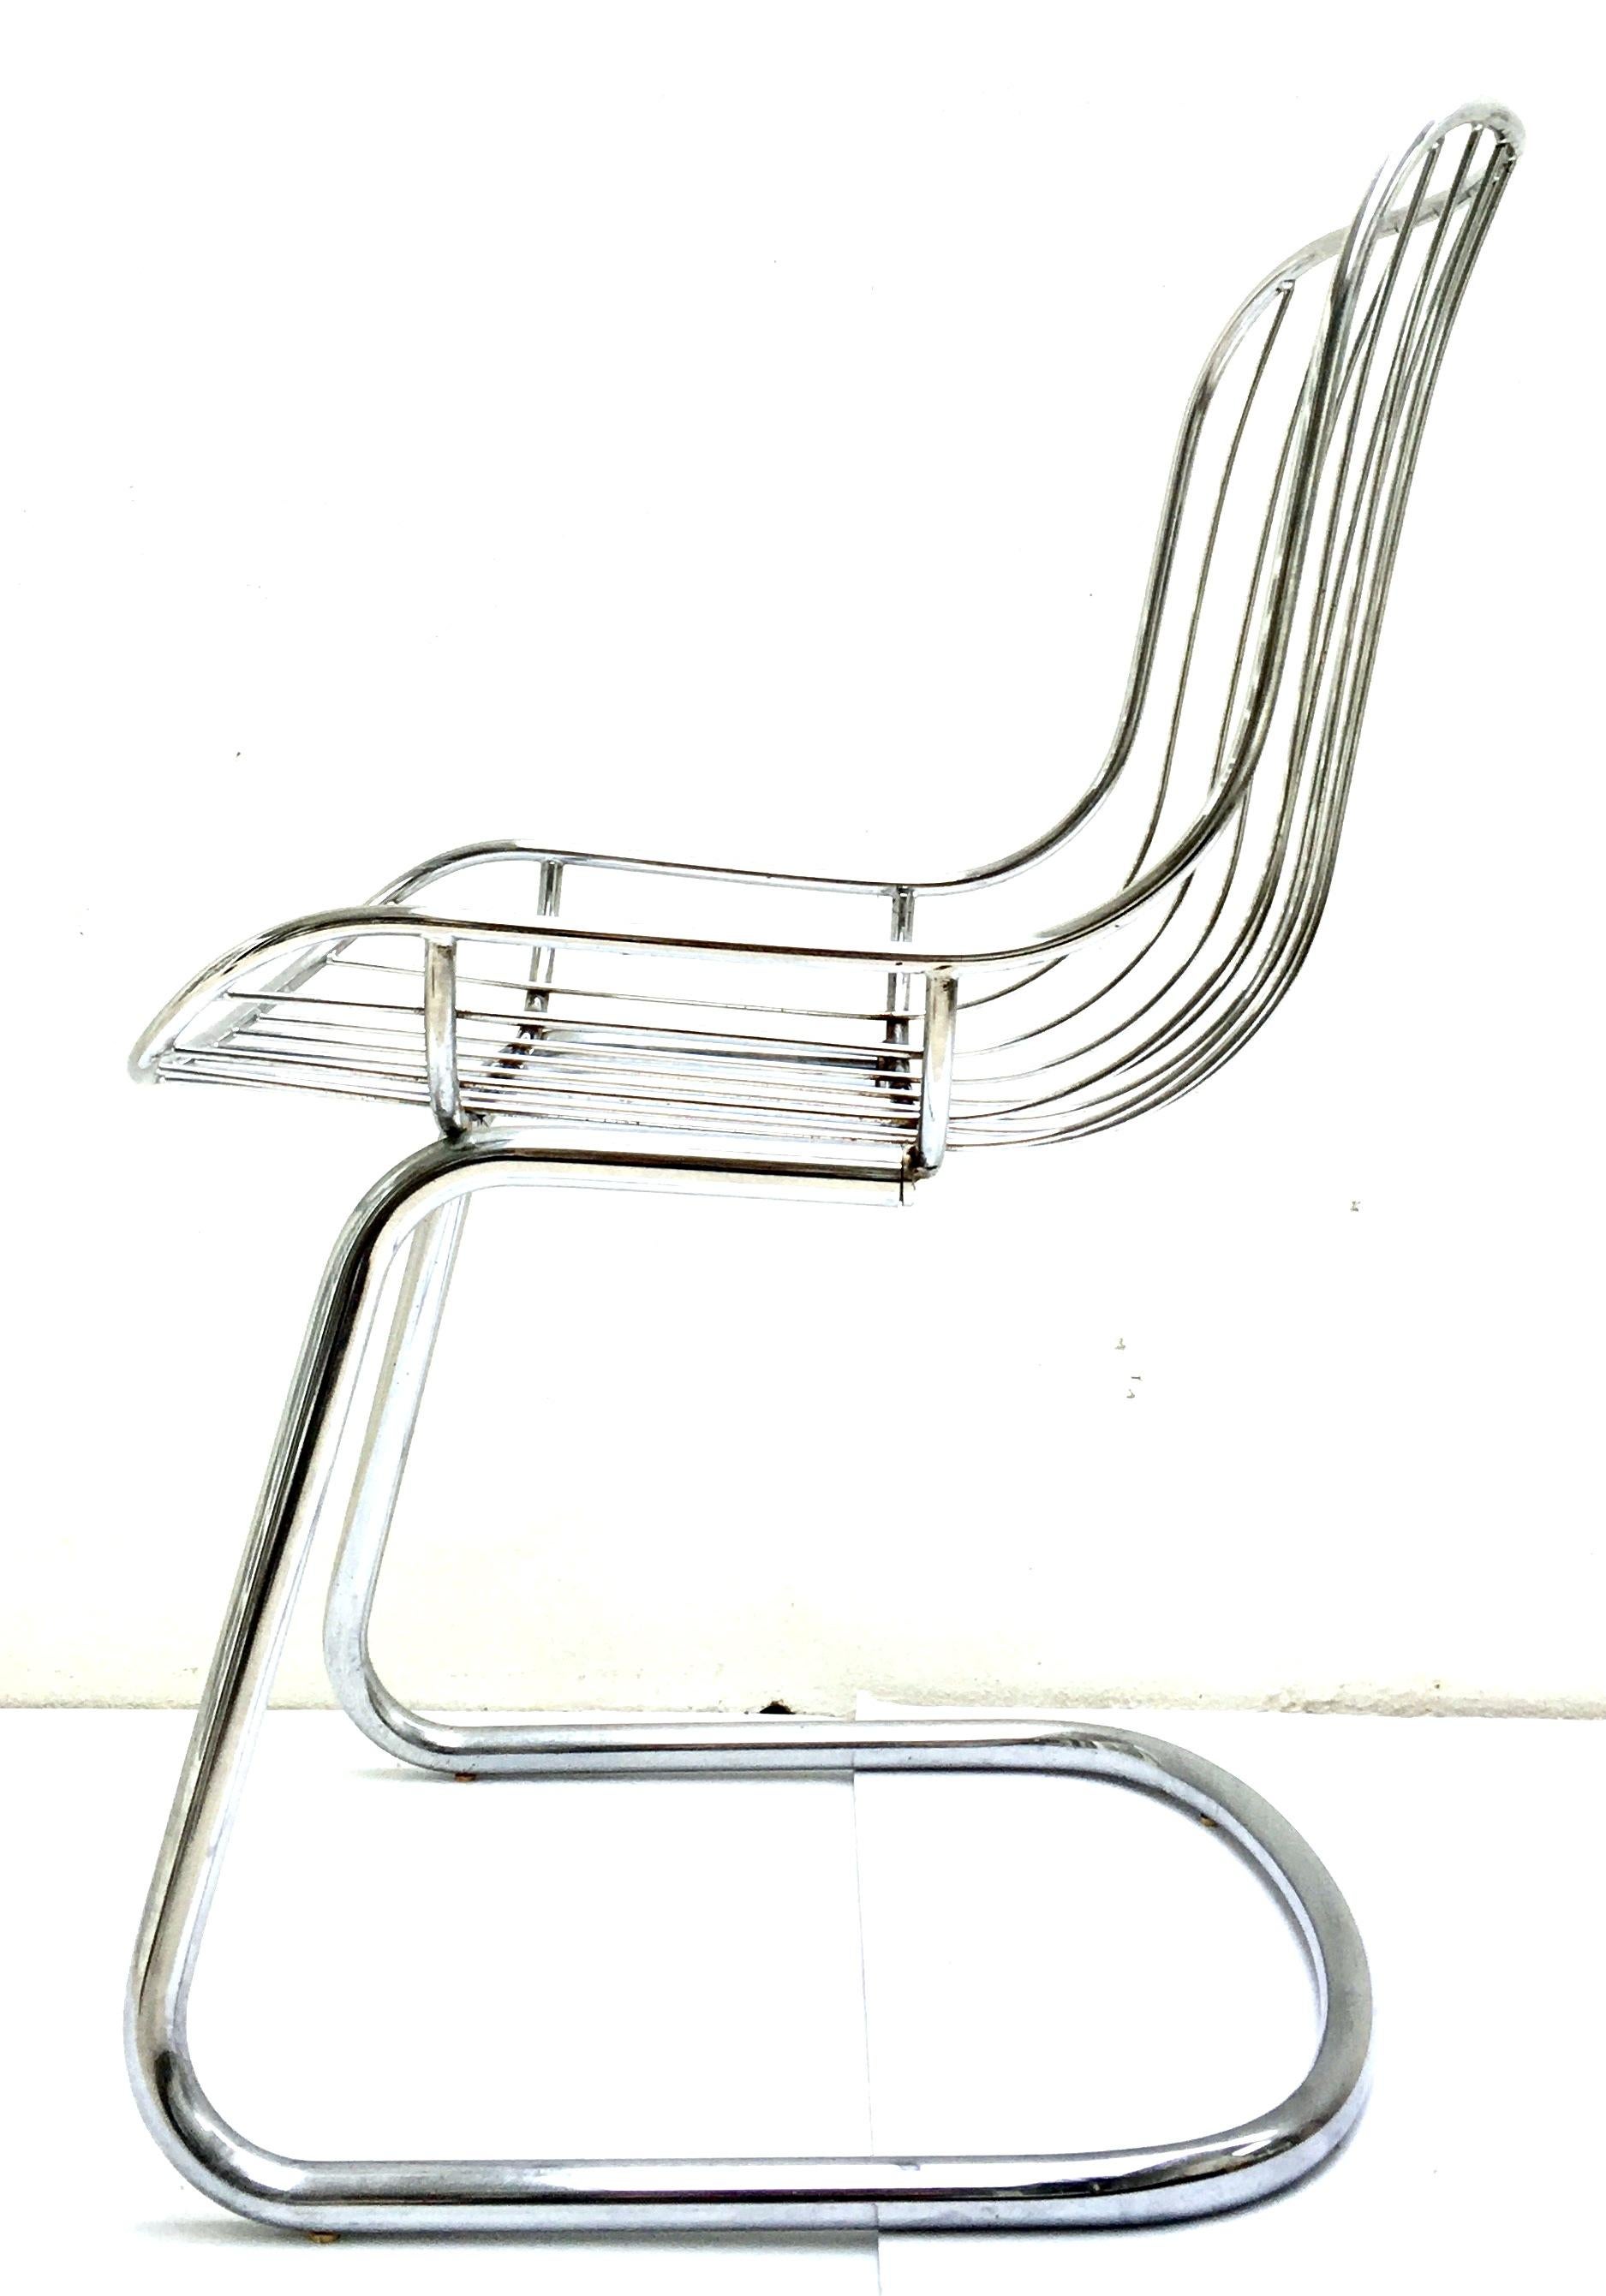 gastone rinaldi chrome chairs